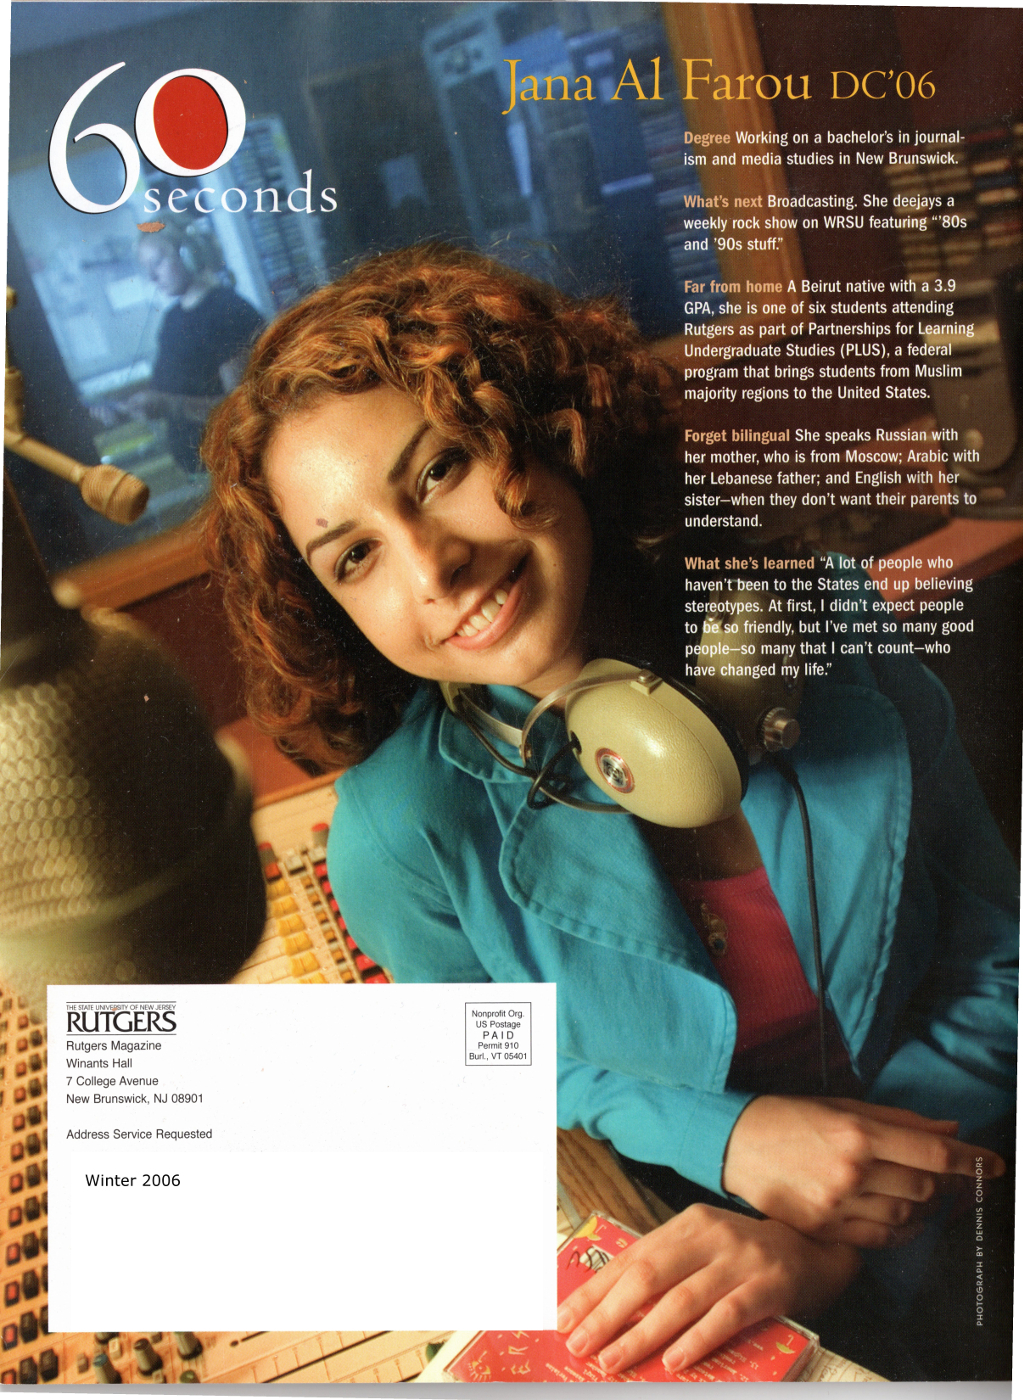 On the back cover of the Rutgers Magazine - Jana Al Farou 06